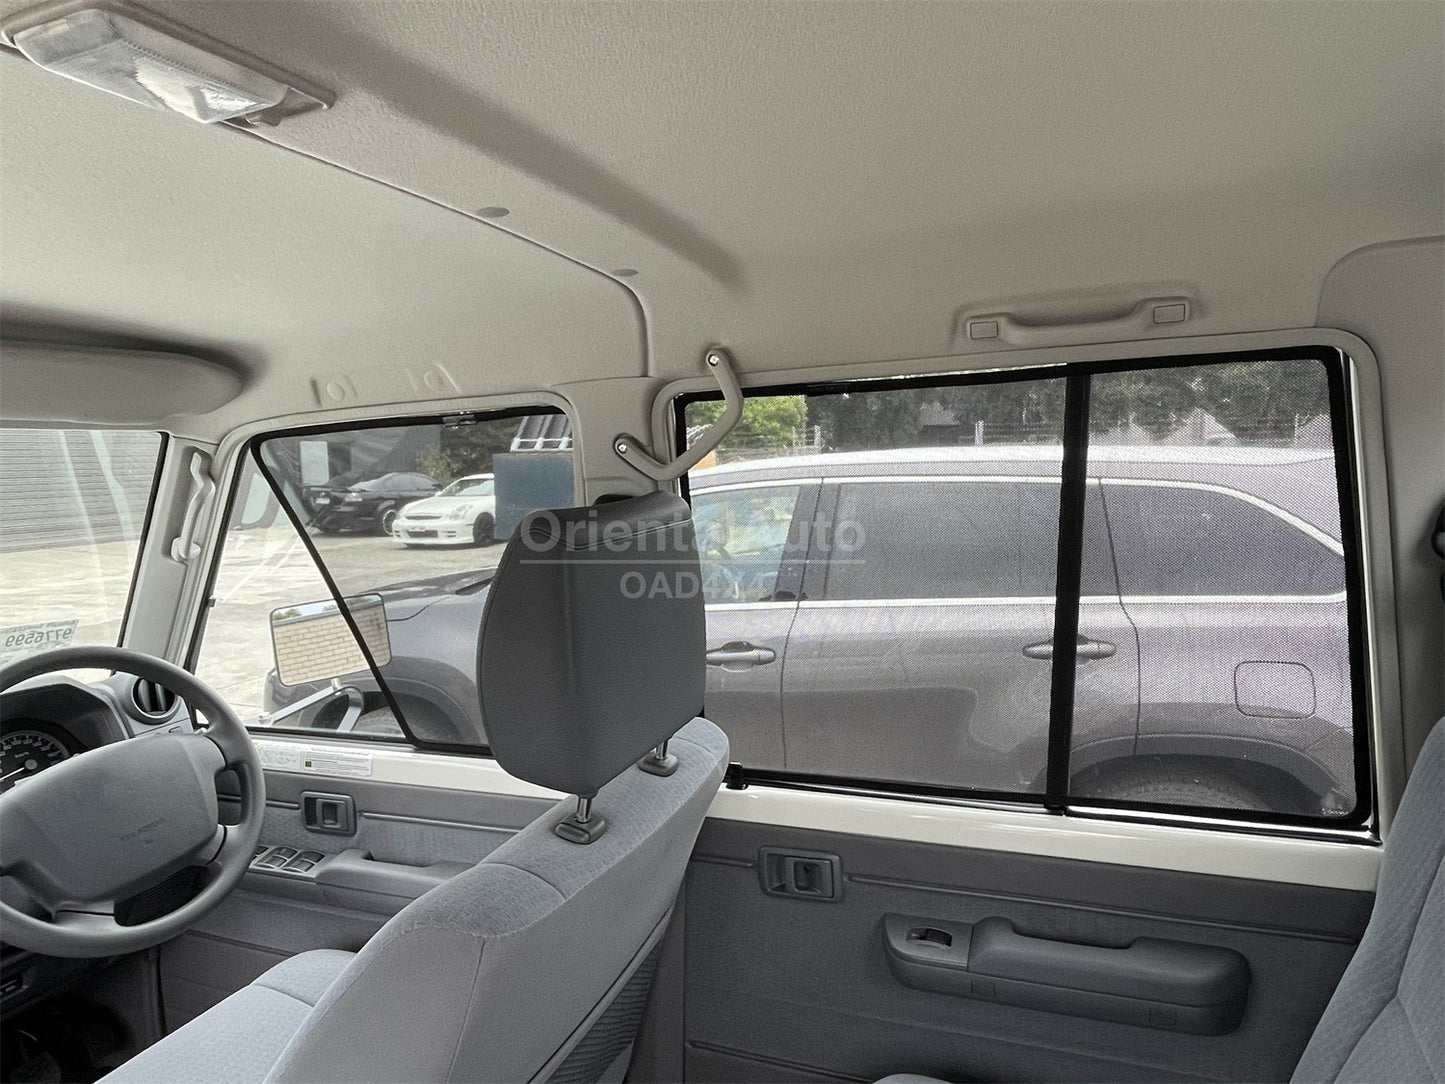 4PCS Magnetic Sun Shade for Toyota LandCruiser Land Cruiser 79 LC79  Window Sun Shades UV Protection Mesh Cover